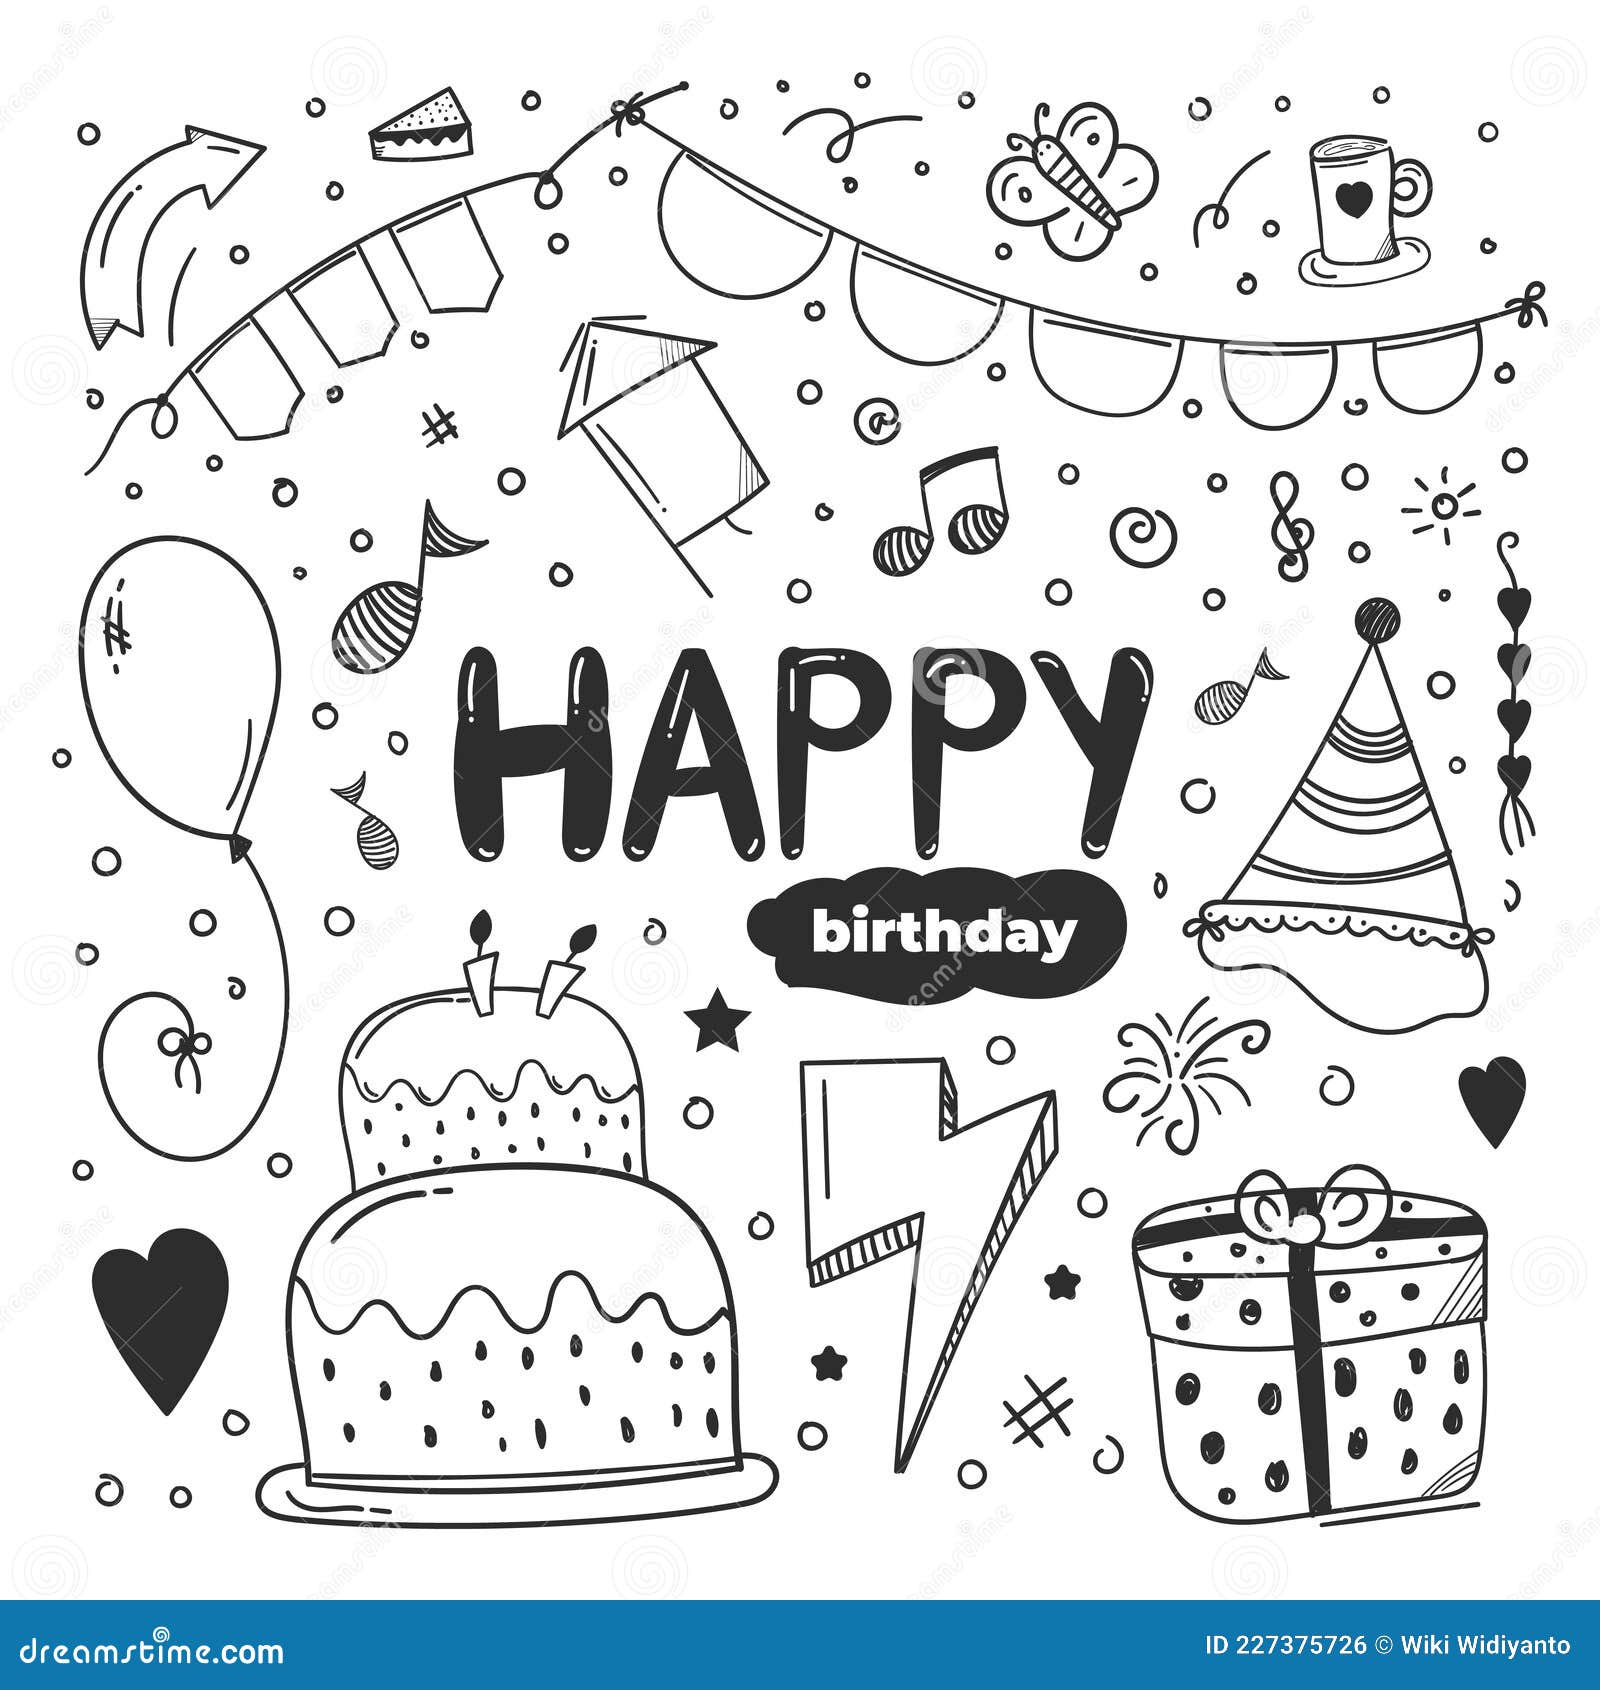 Happy Birthday Doodle. Happy Birthday Element Design with Doodle Style ...